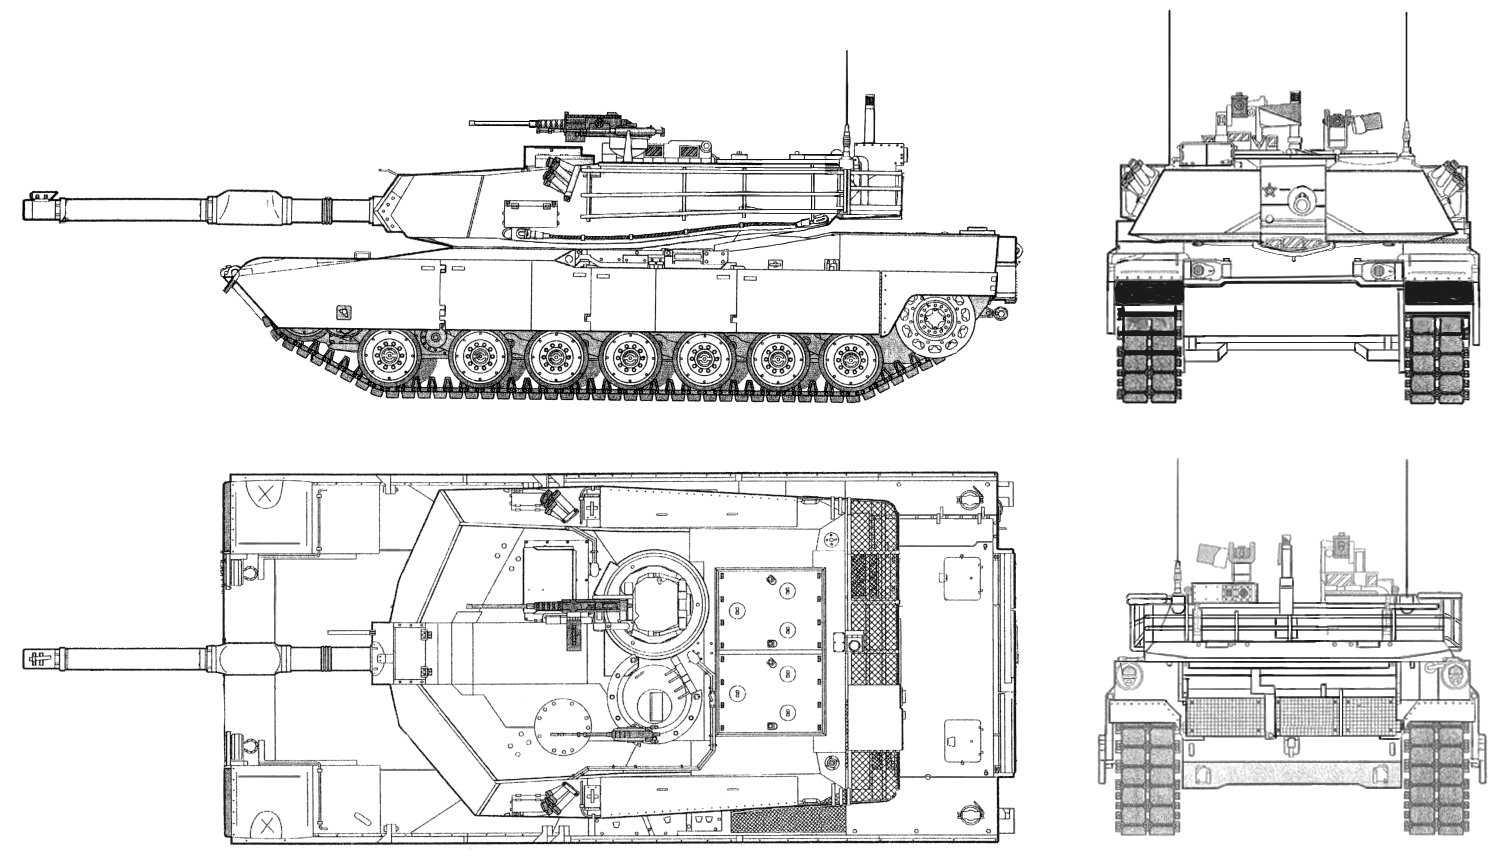 M1 Abrams Main Battle